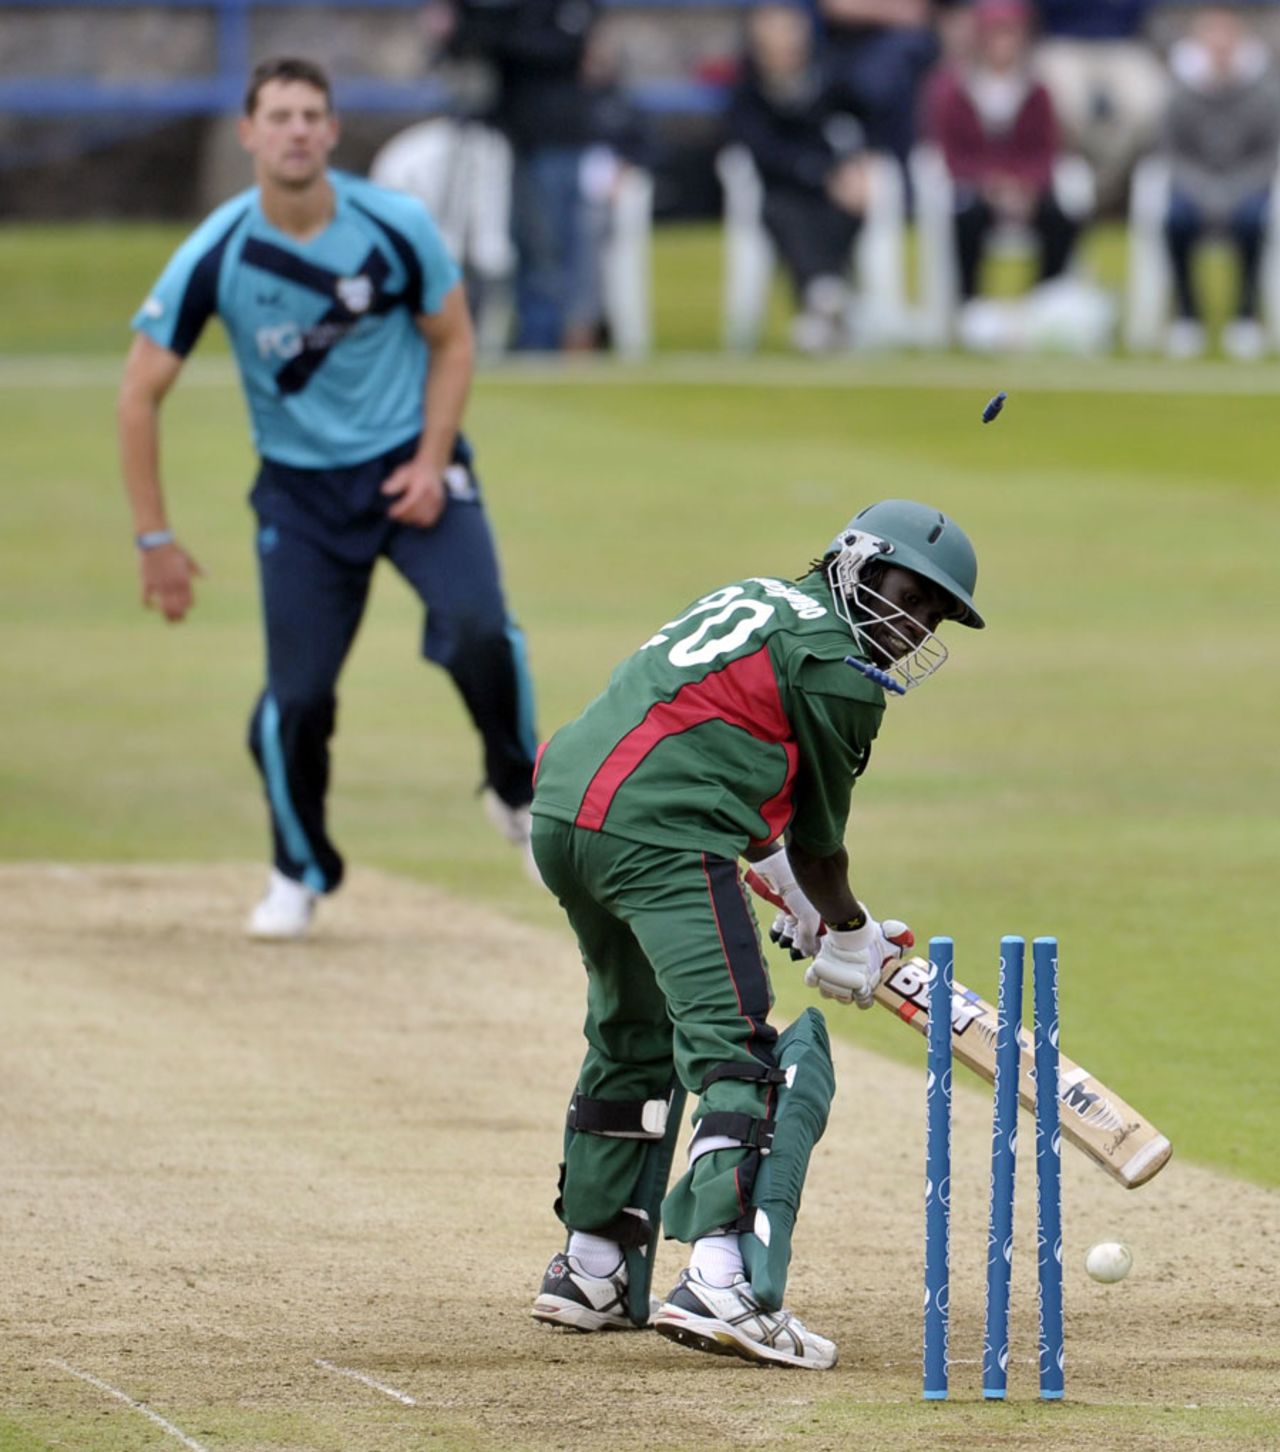 Rob Taylor bowled Nelson Odhiambo for 17, Scotland v Kenya, ICC World Cricket League Championship, Aberdeen, July 2, 2013 